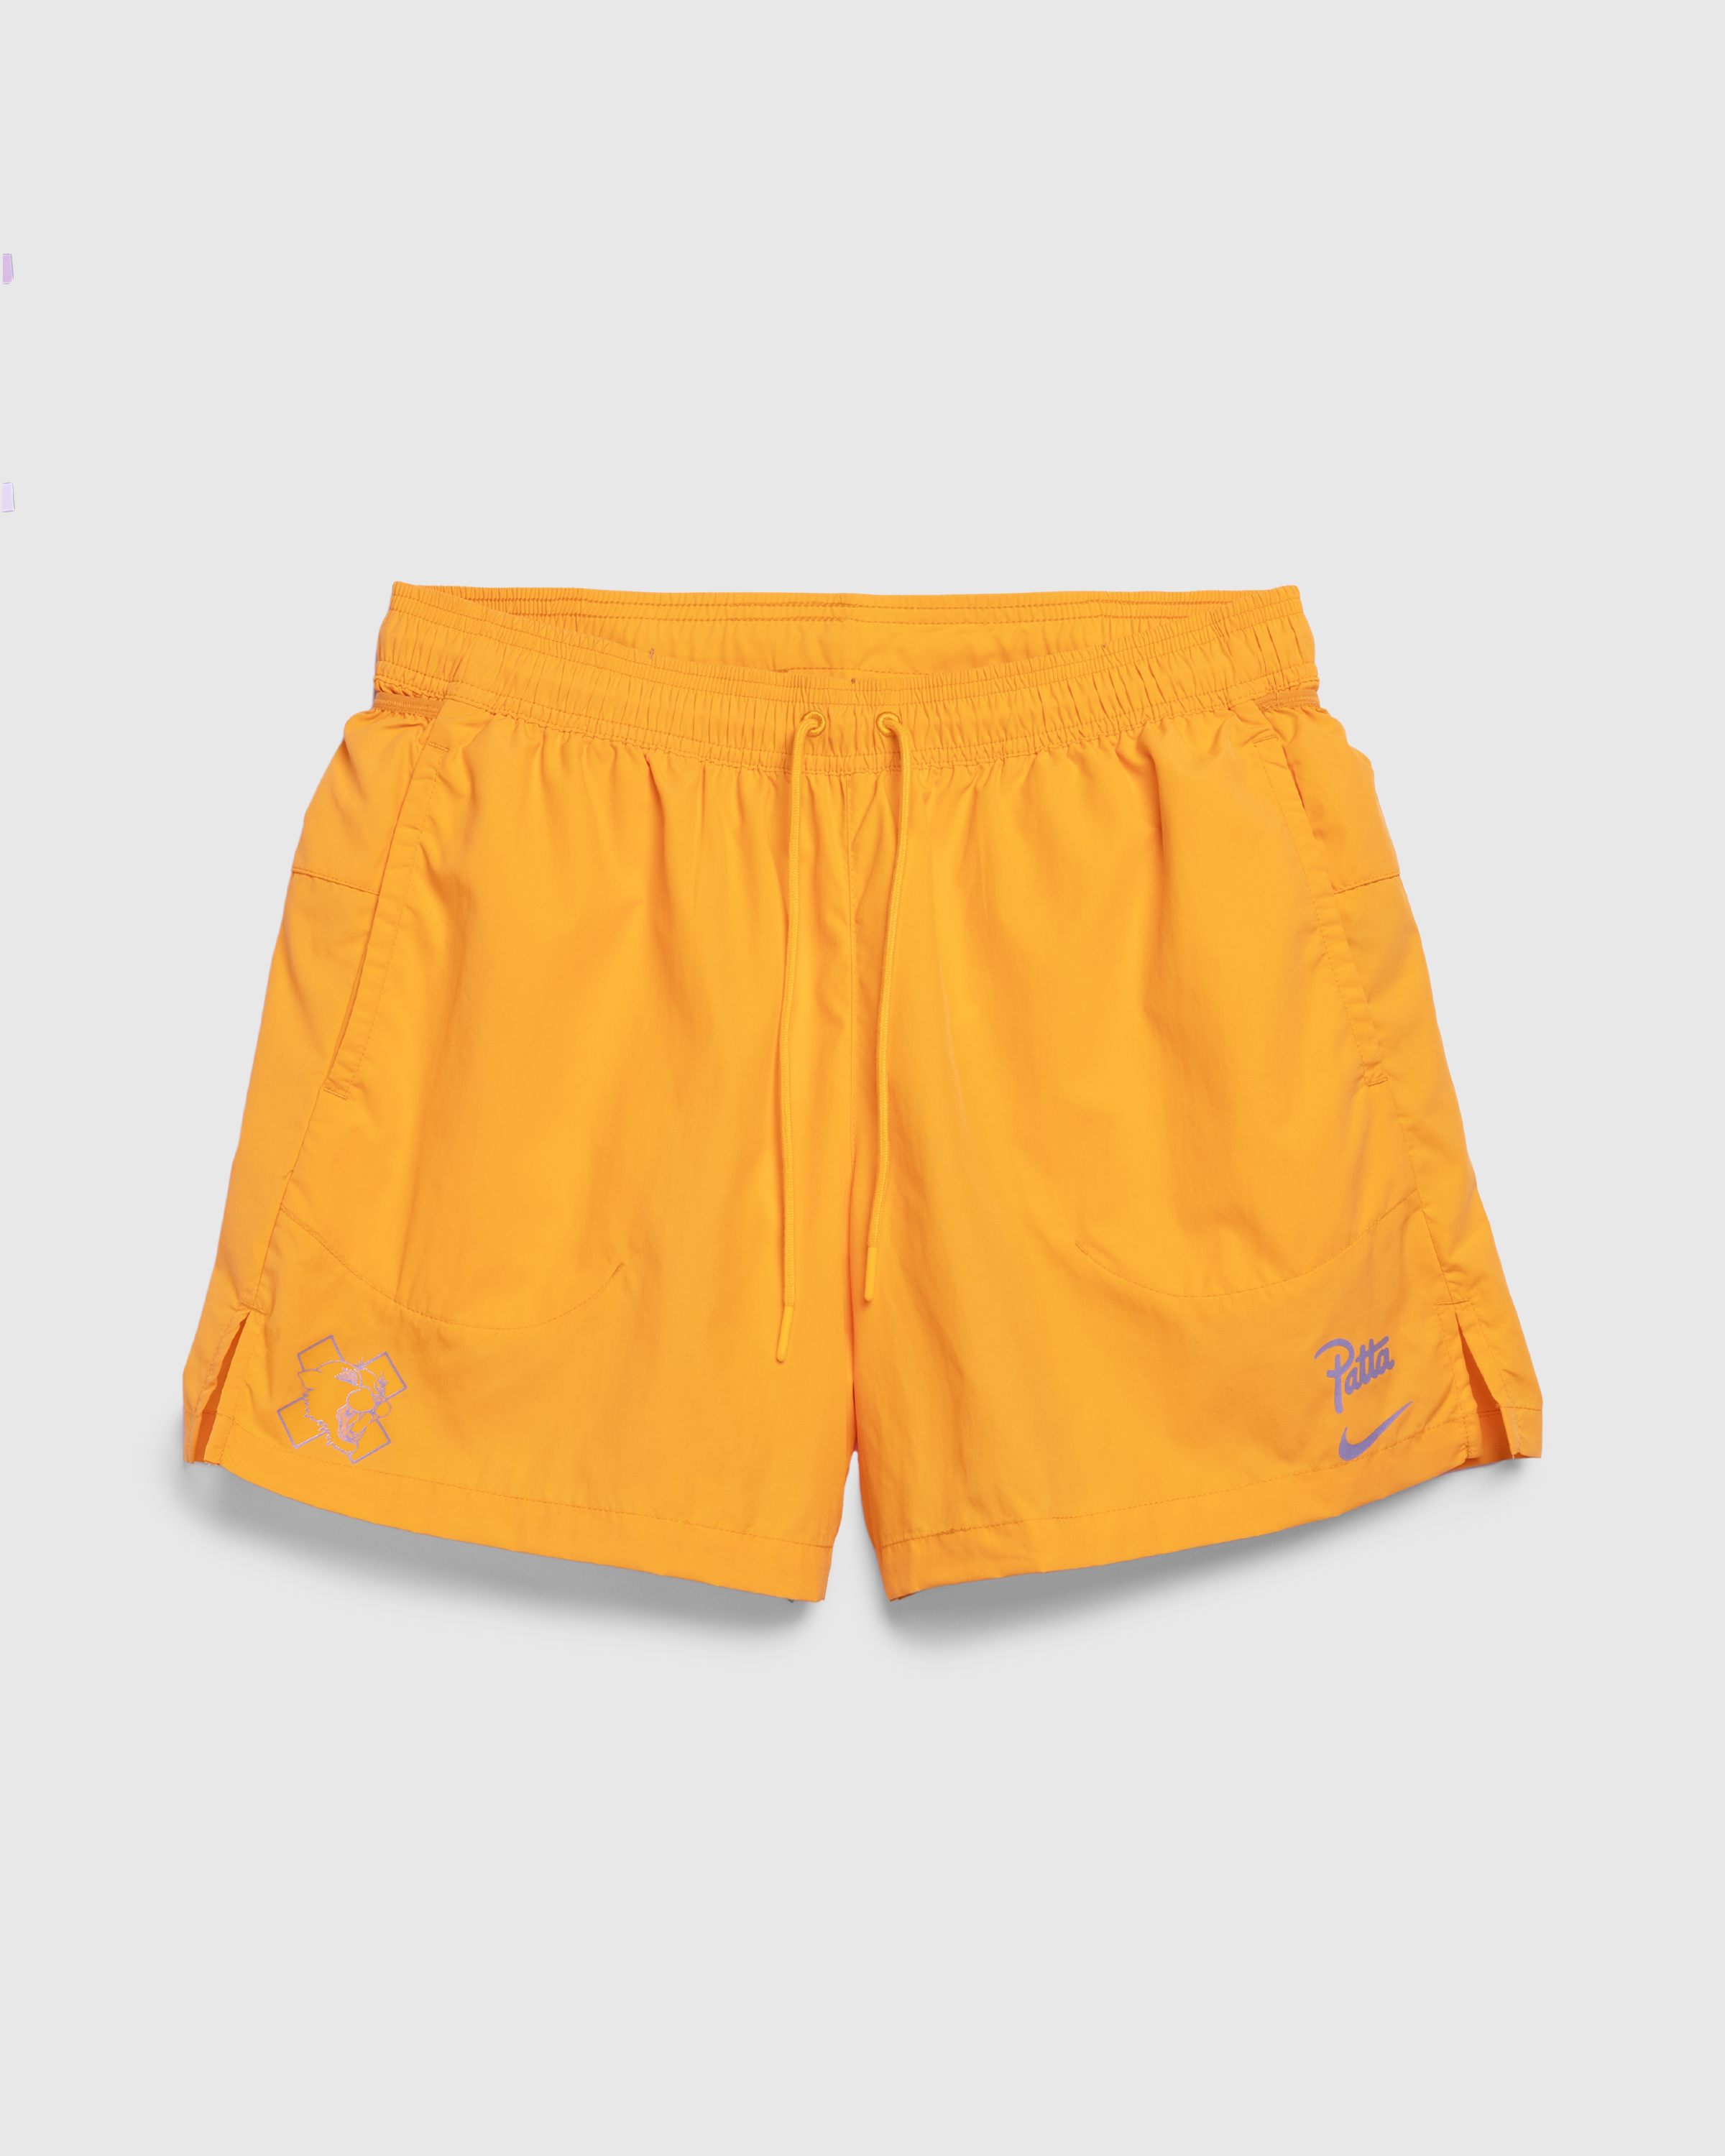 Nike x Patta – Men's Shorts Sundial - Active Shorts - Yellow - Image 1